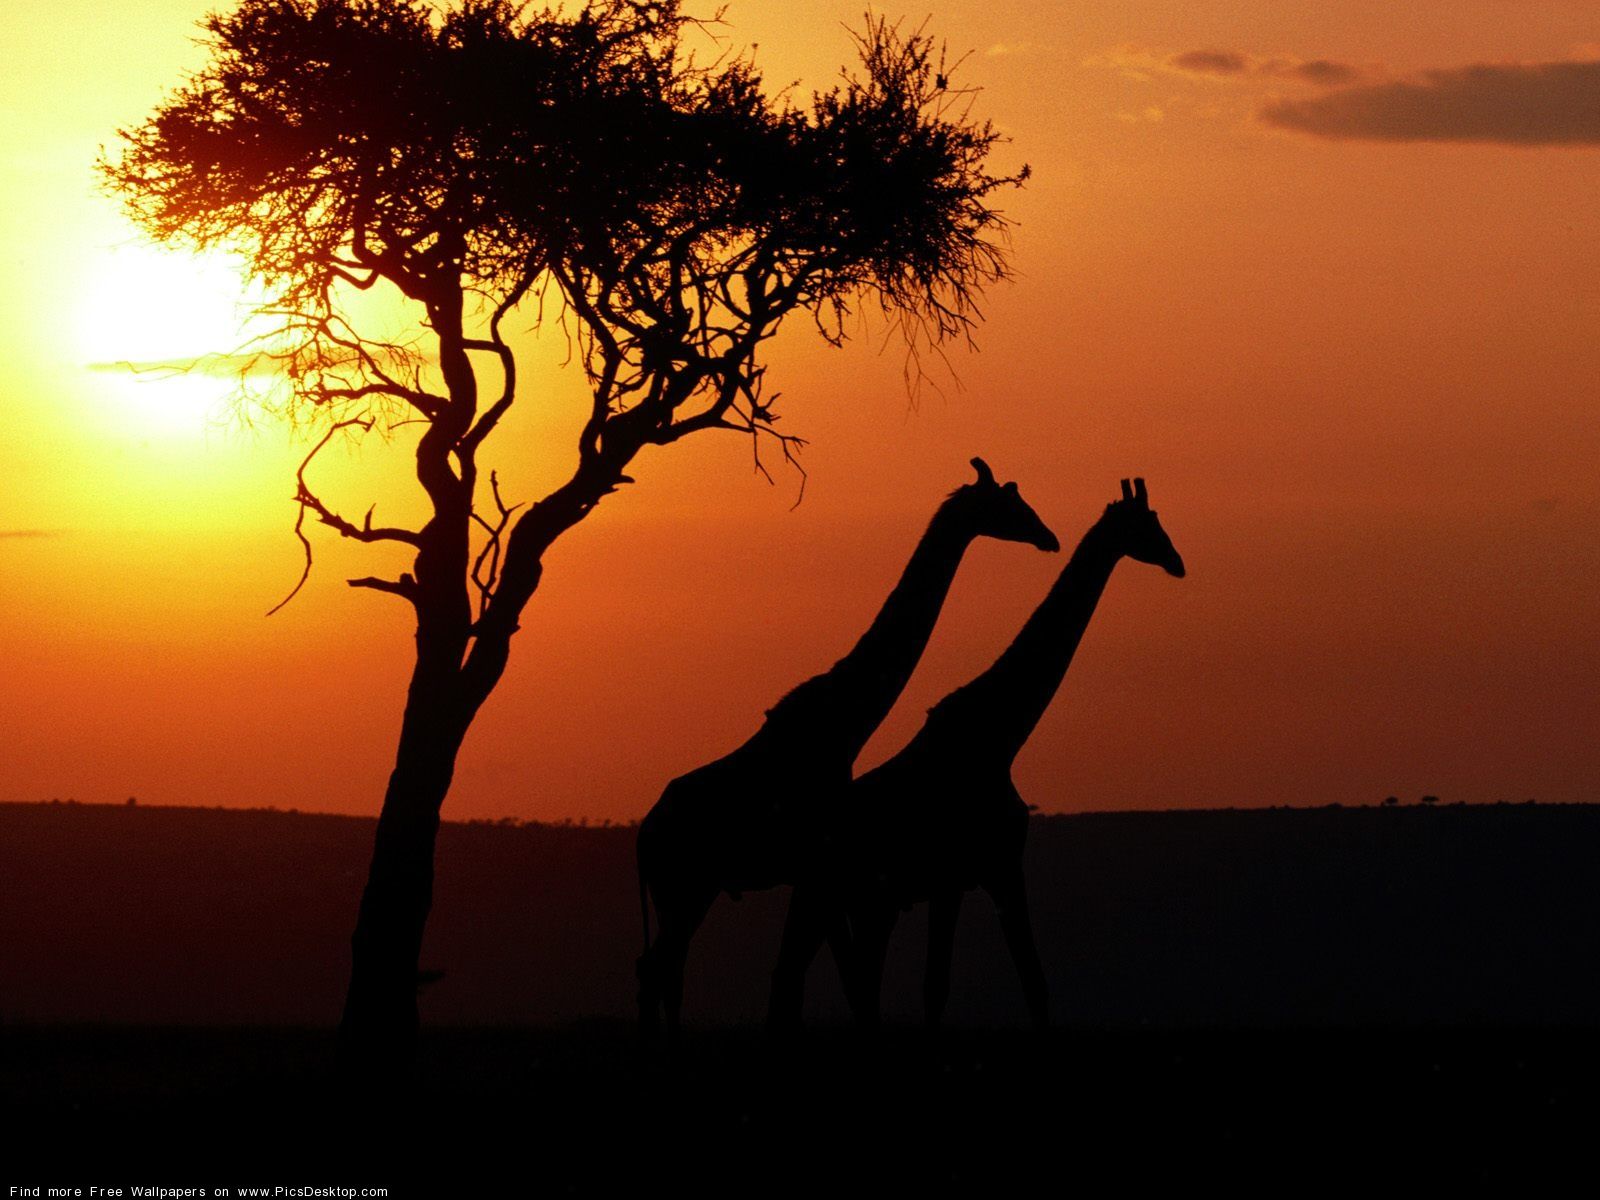 The giraffe - Wild Animals - Free Desktop Wallpaper 1600x1200 ...